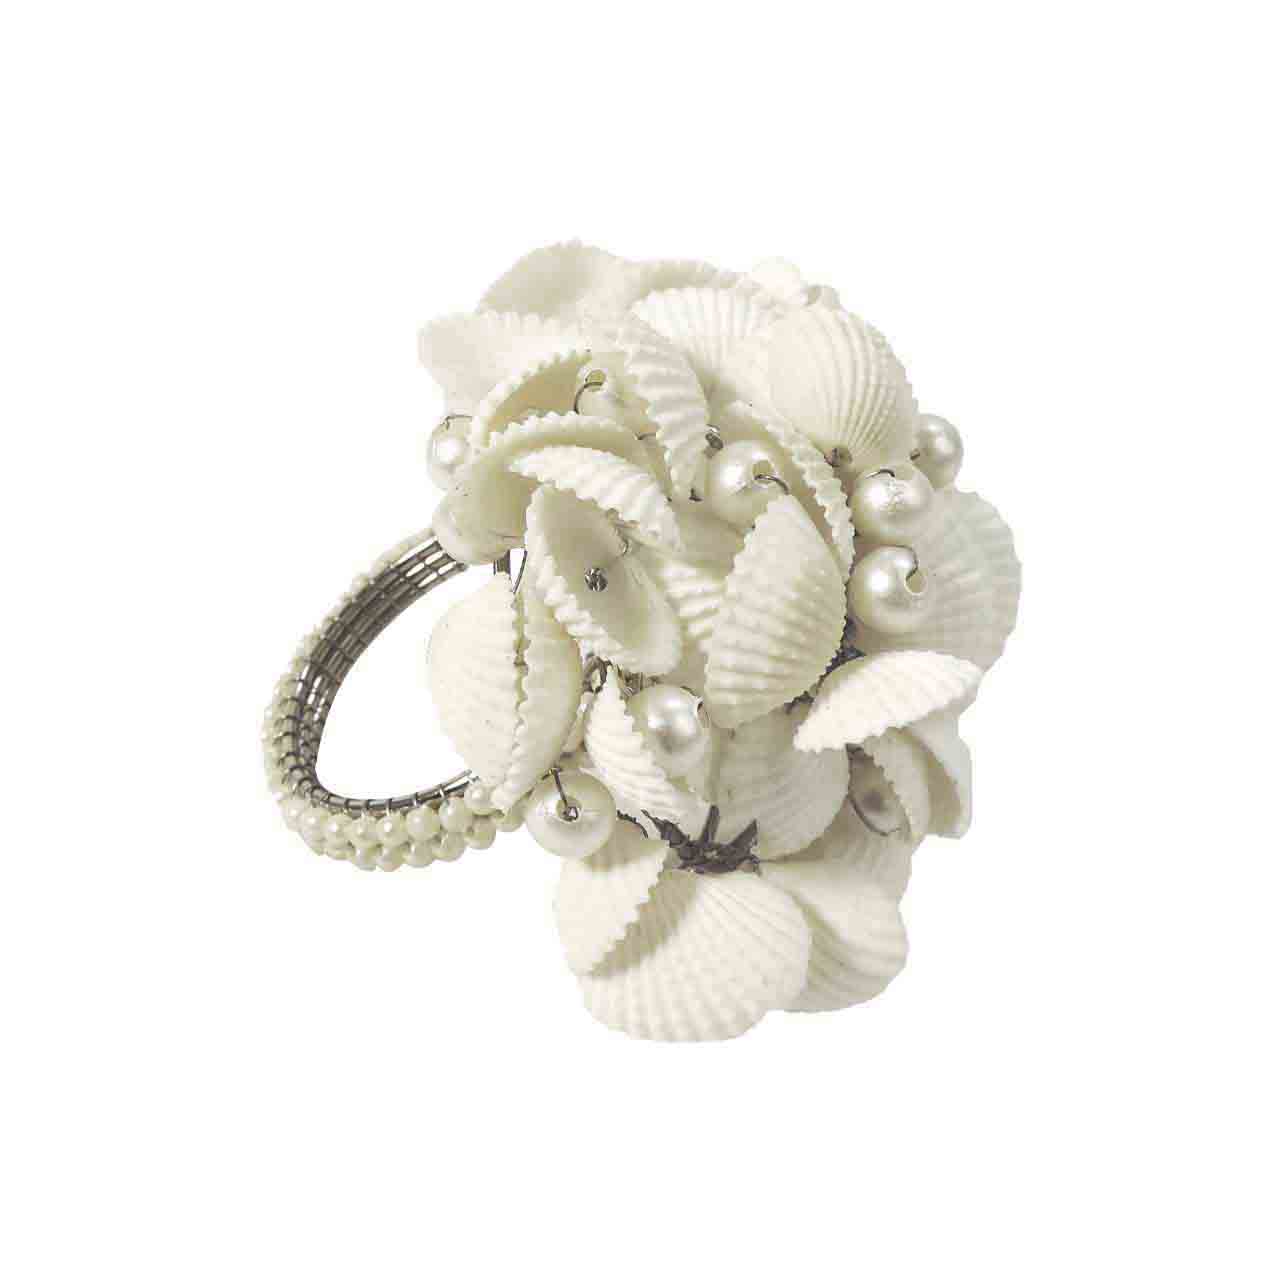 Bead Cluster Napkin Ring in White, Set of 4